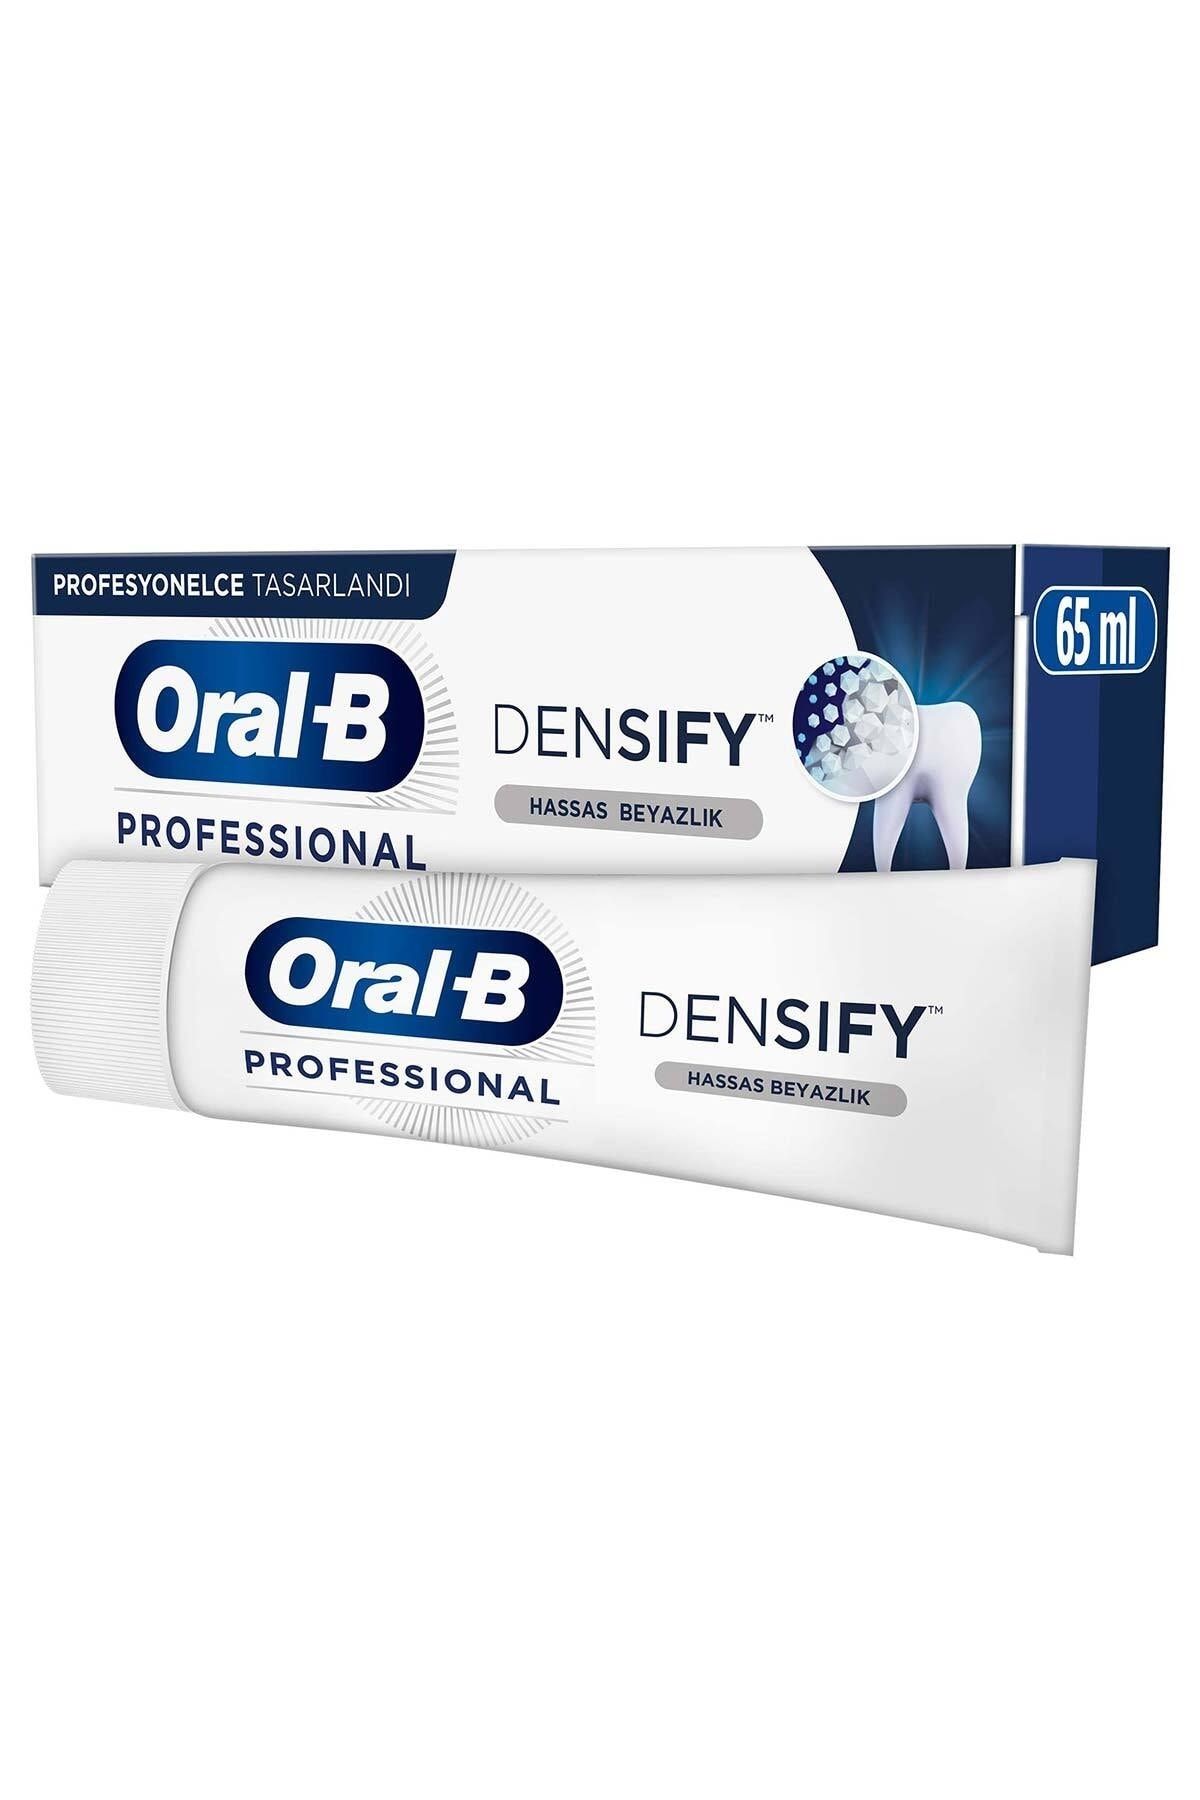 Oral-B Professional Densify Hassas Beyazlık Diş Macunu 65ml